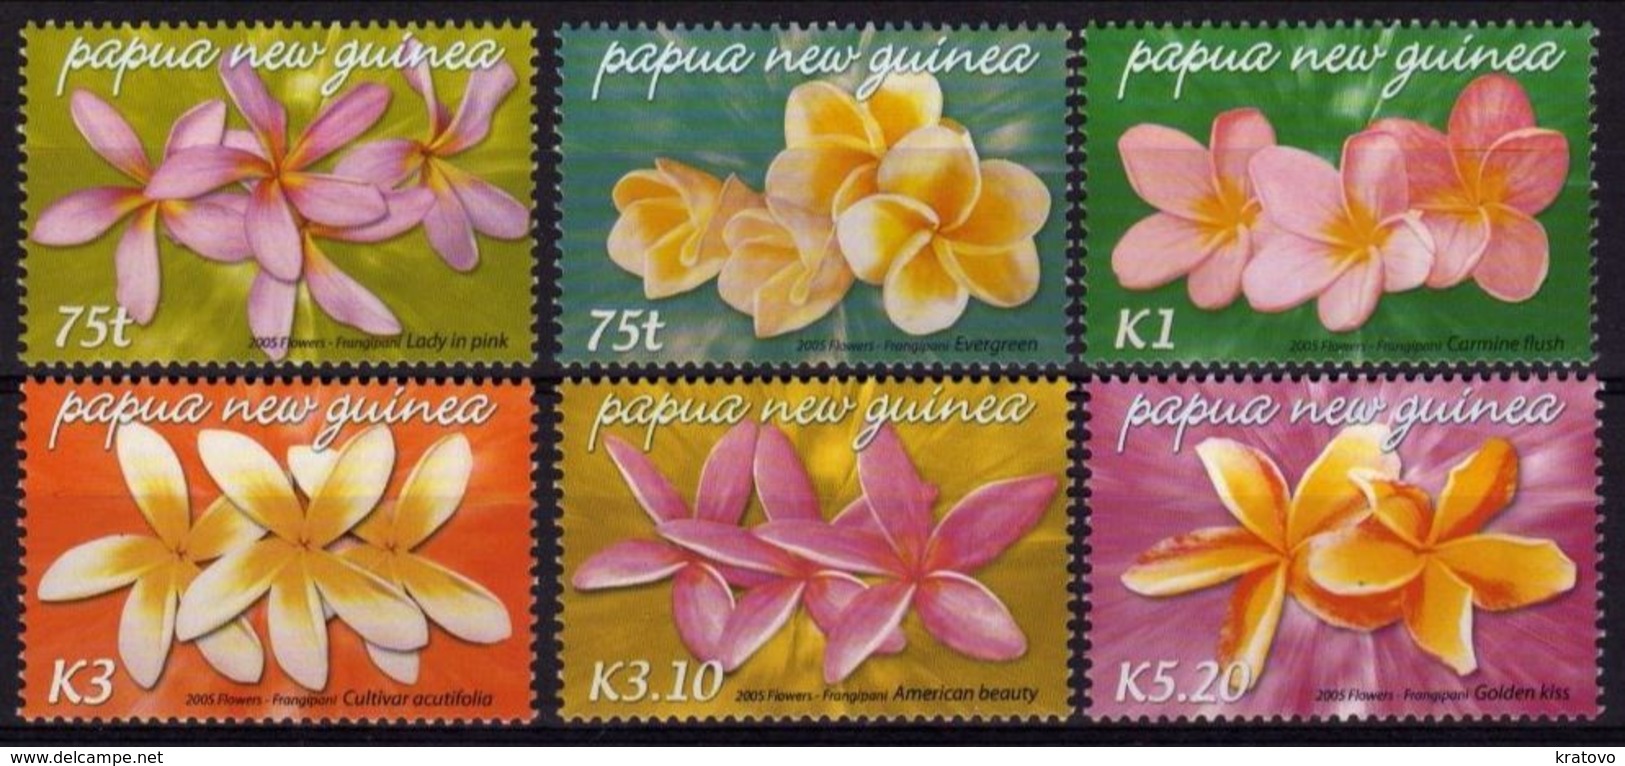 PAPUA NEW GUINEA 2005 Mi # 1123 - 1128 FLORA FLOWERS MNH - Papua New Guinea